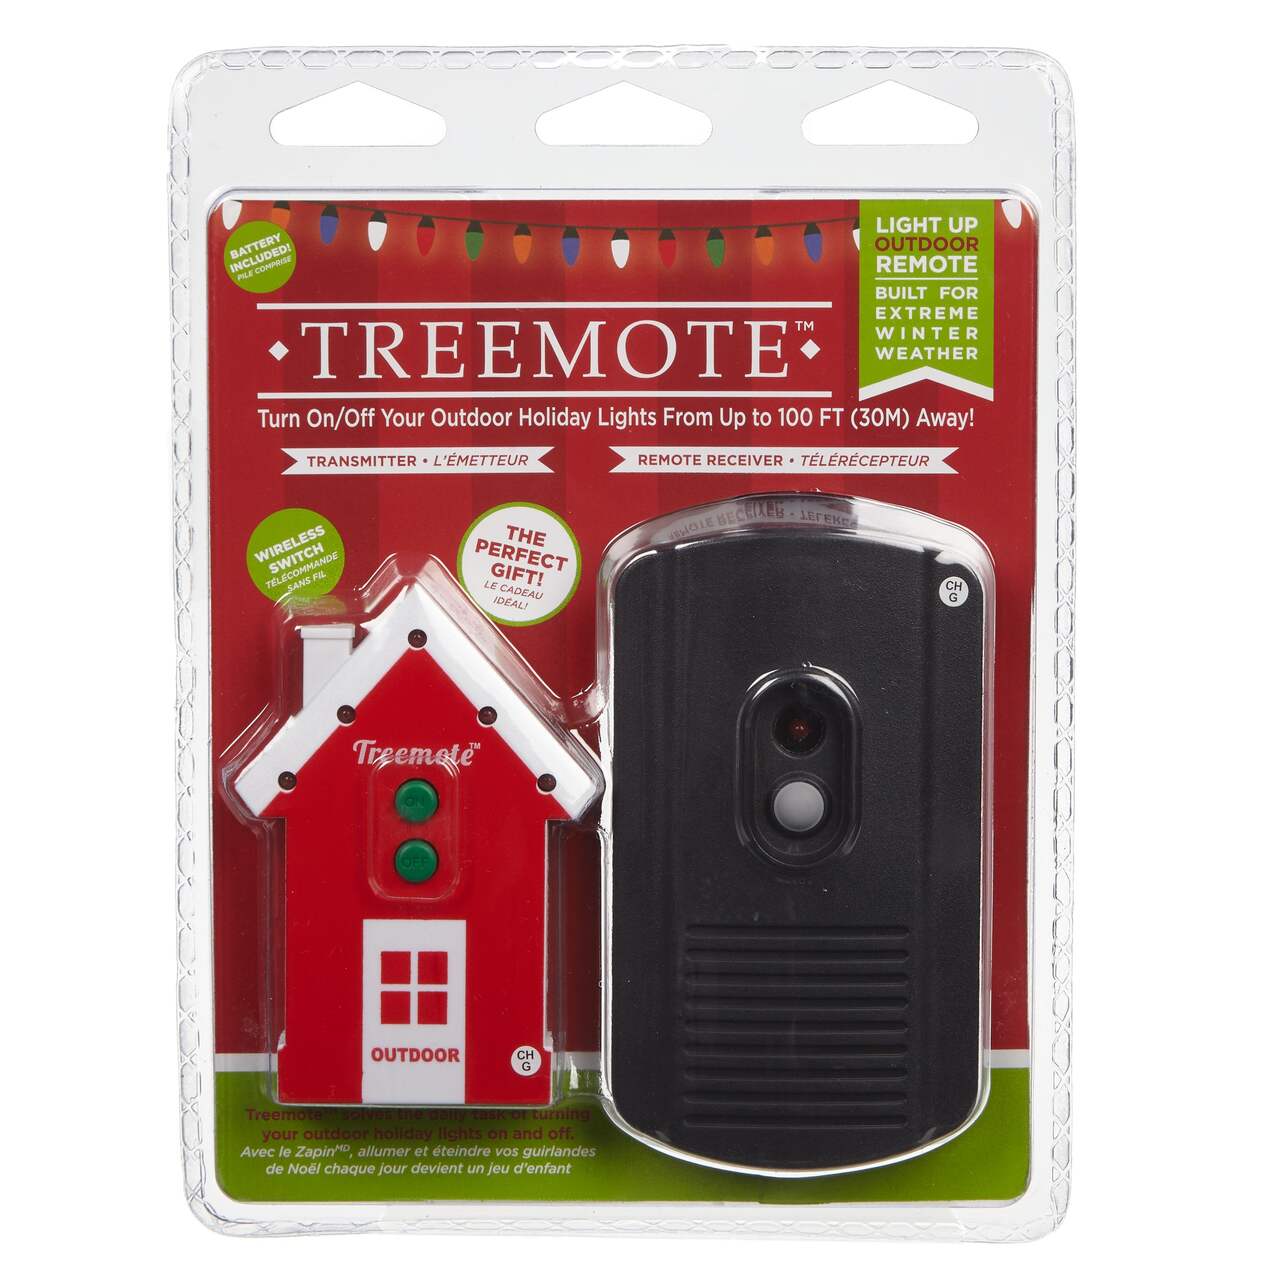 National Treemote Christmas Light Switch